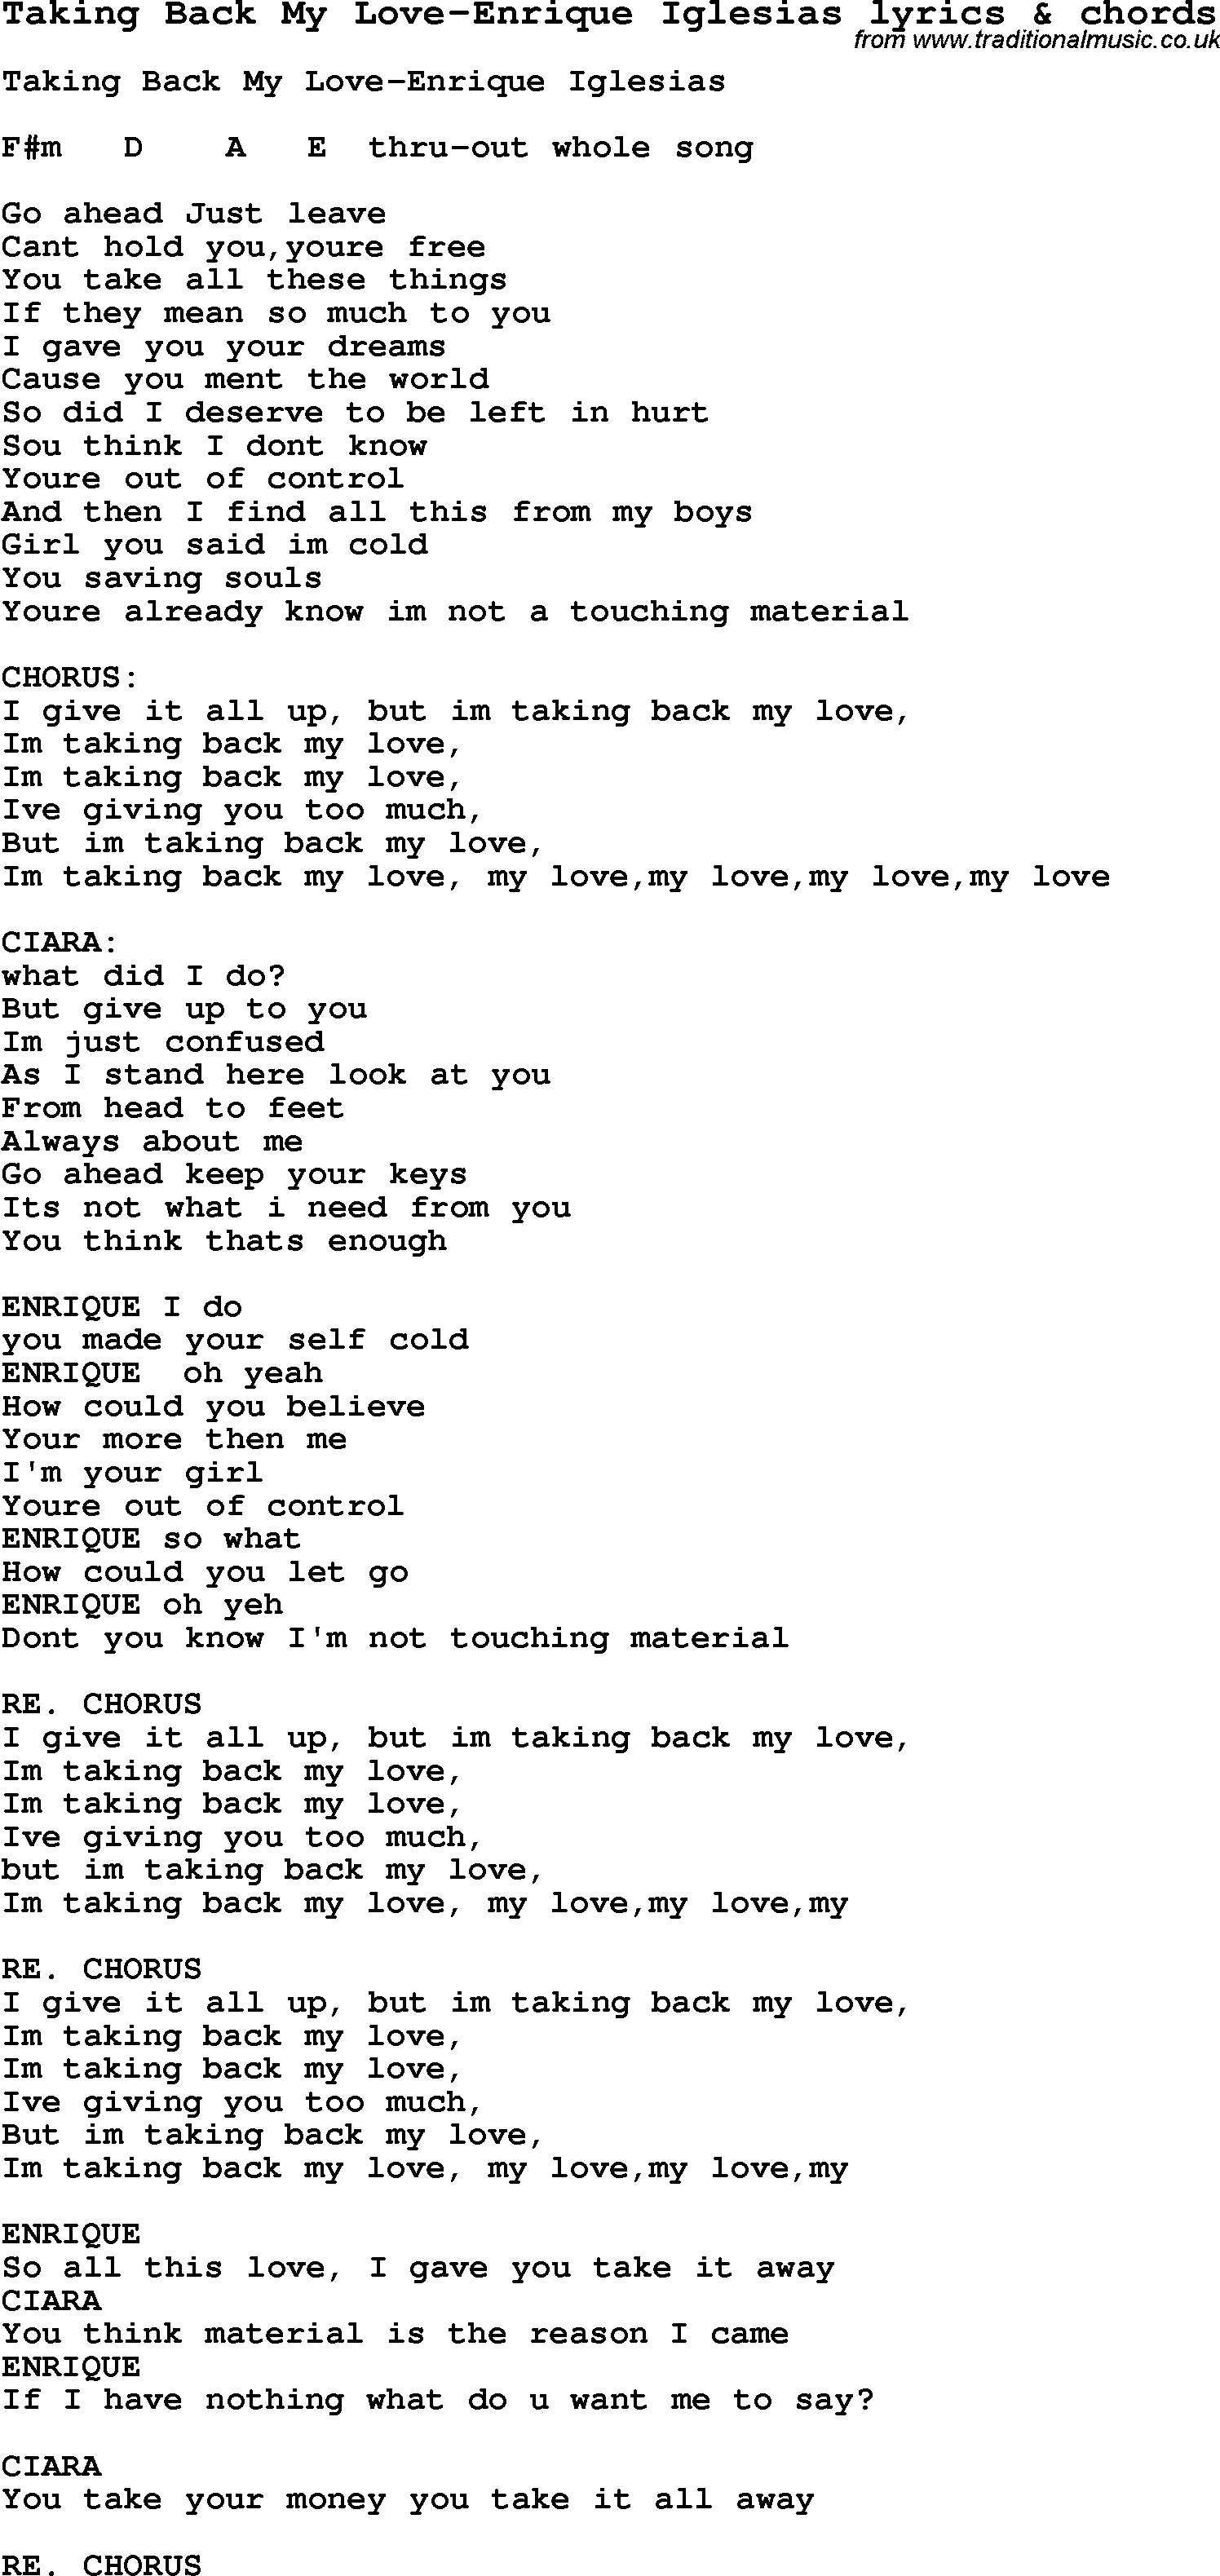 Love Song Lyrics for: Taking Back My Love-Enrique Iglesias with chords for Ukulele, Guitar Banjo etc.